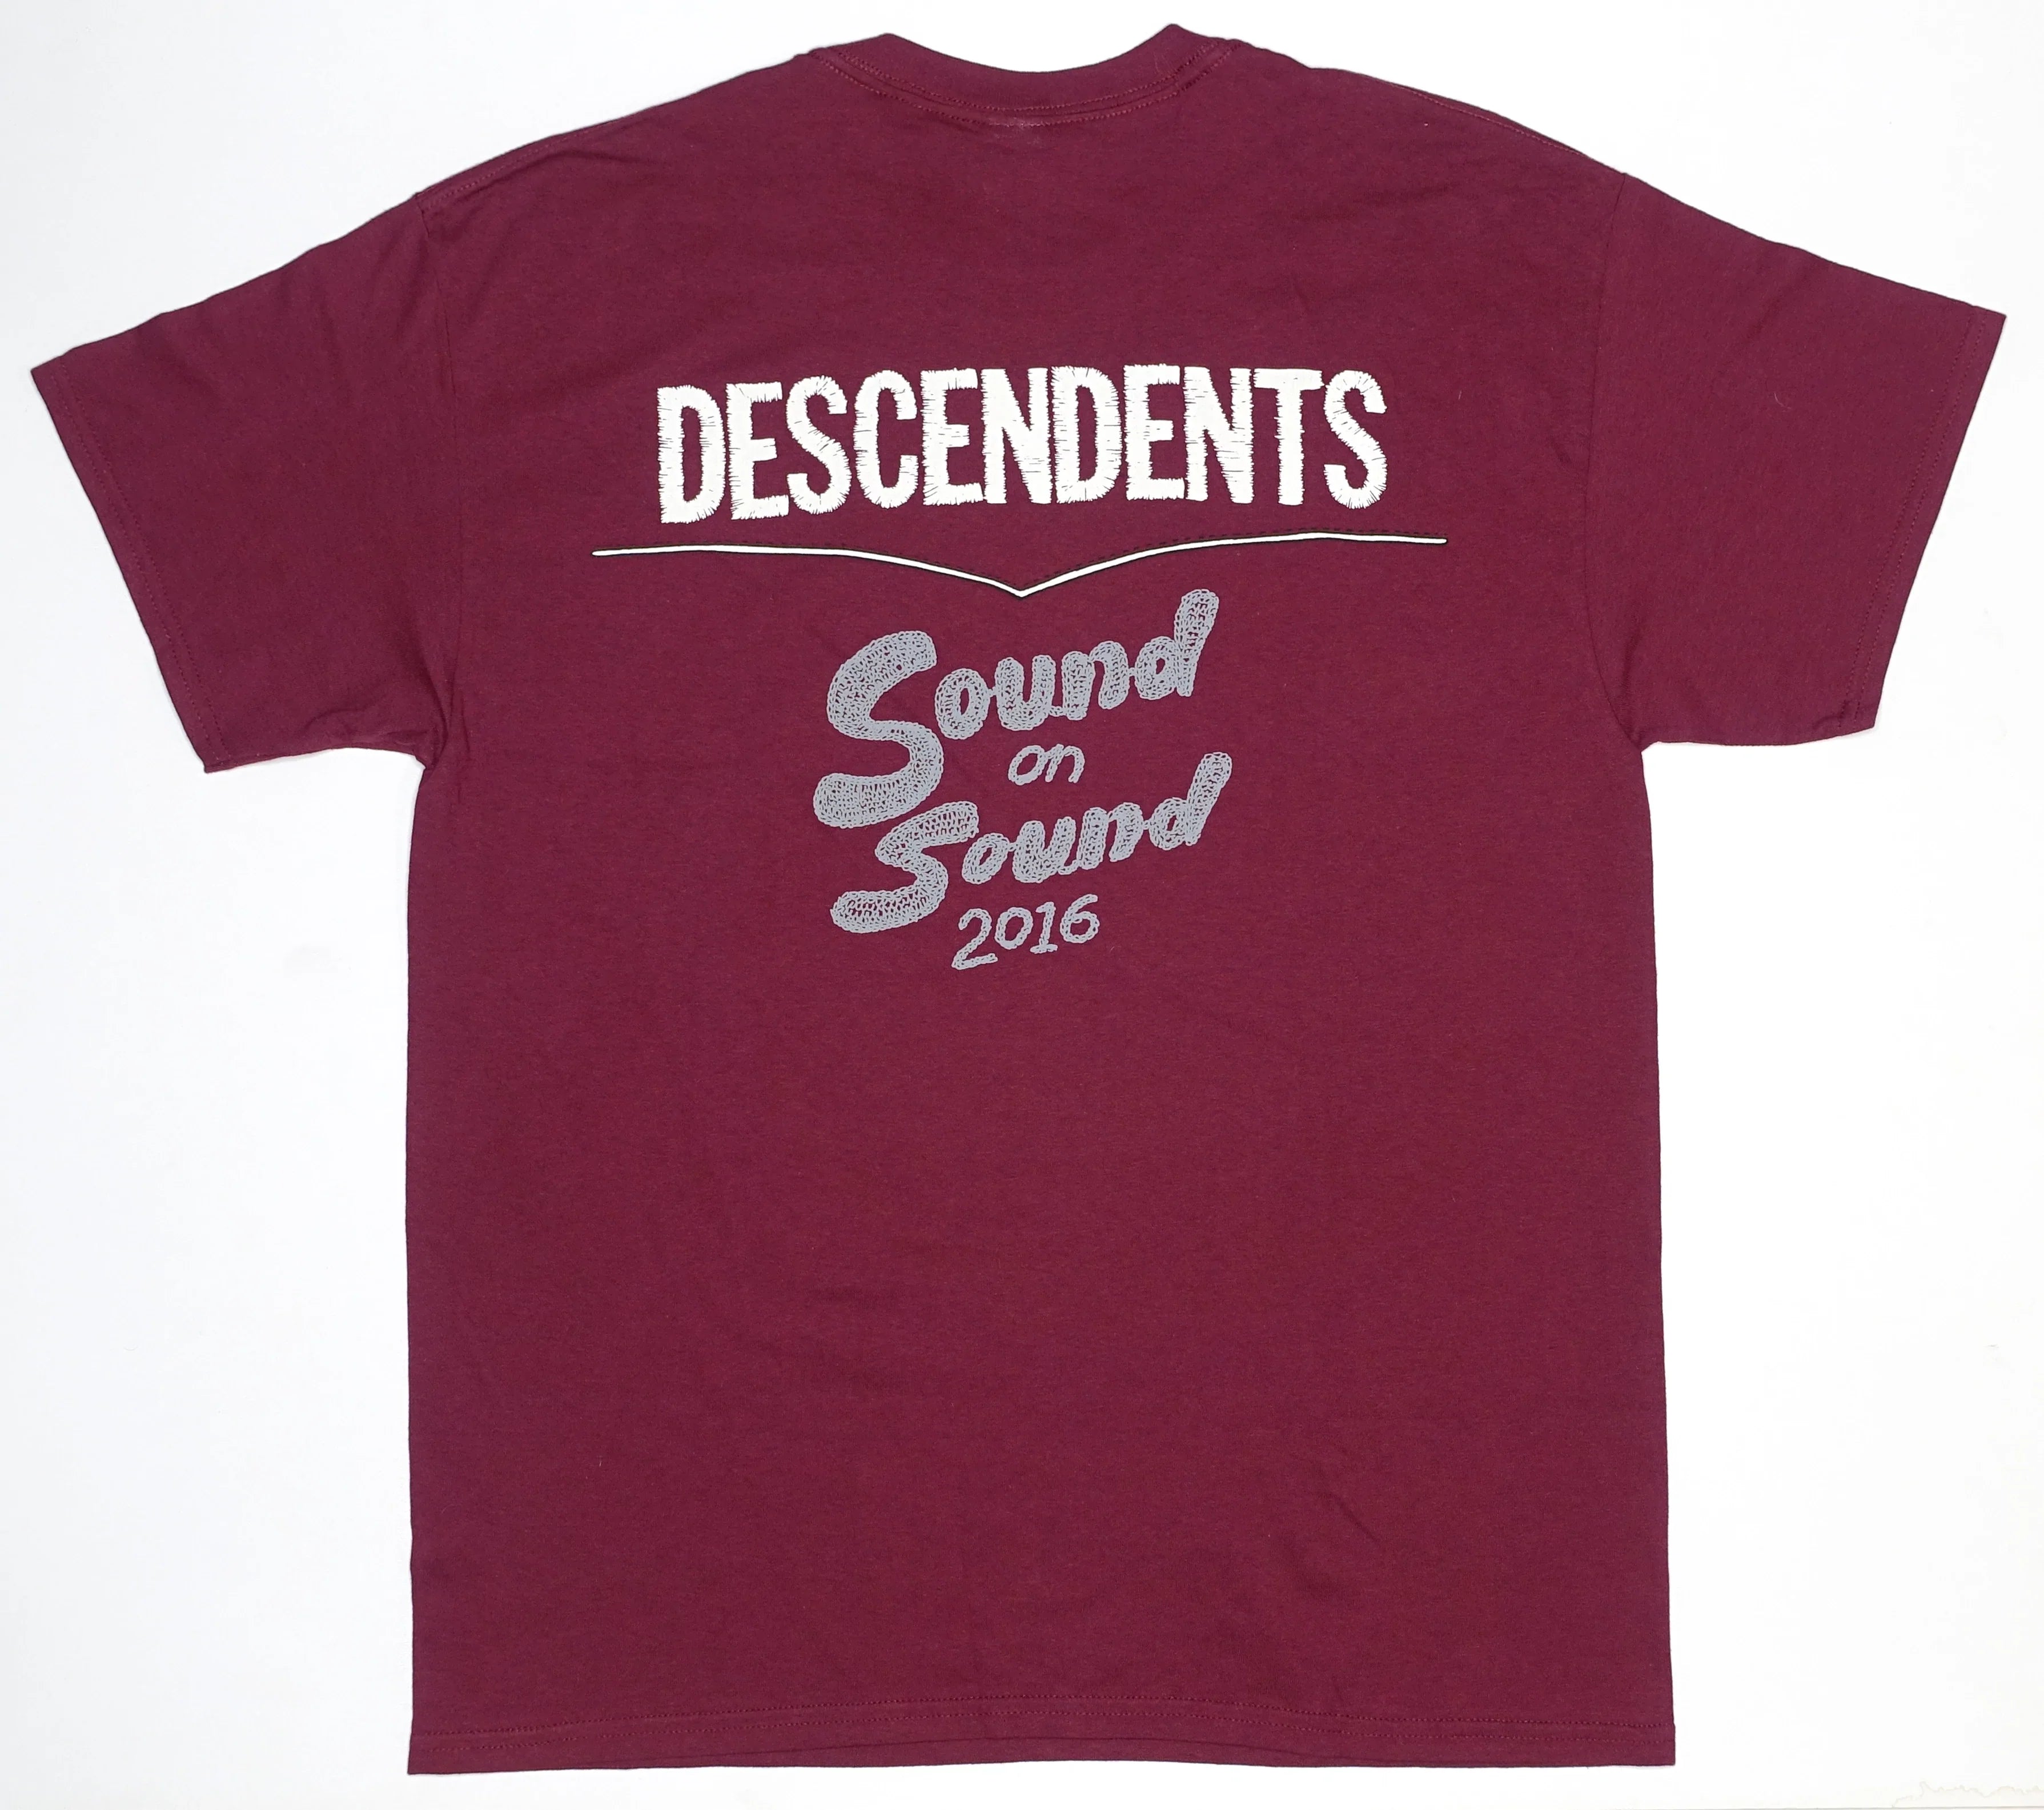 Descendents - Sound On Sound 2016 Tour Shirt Size Large